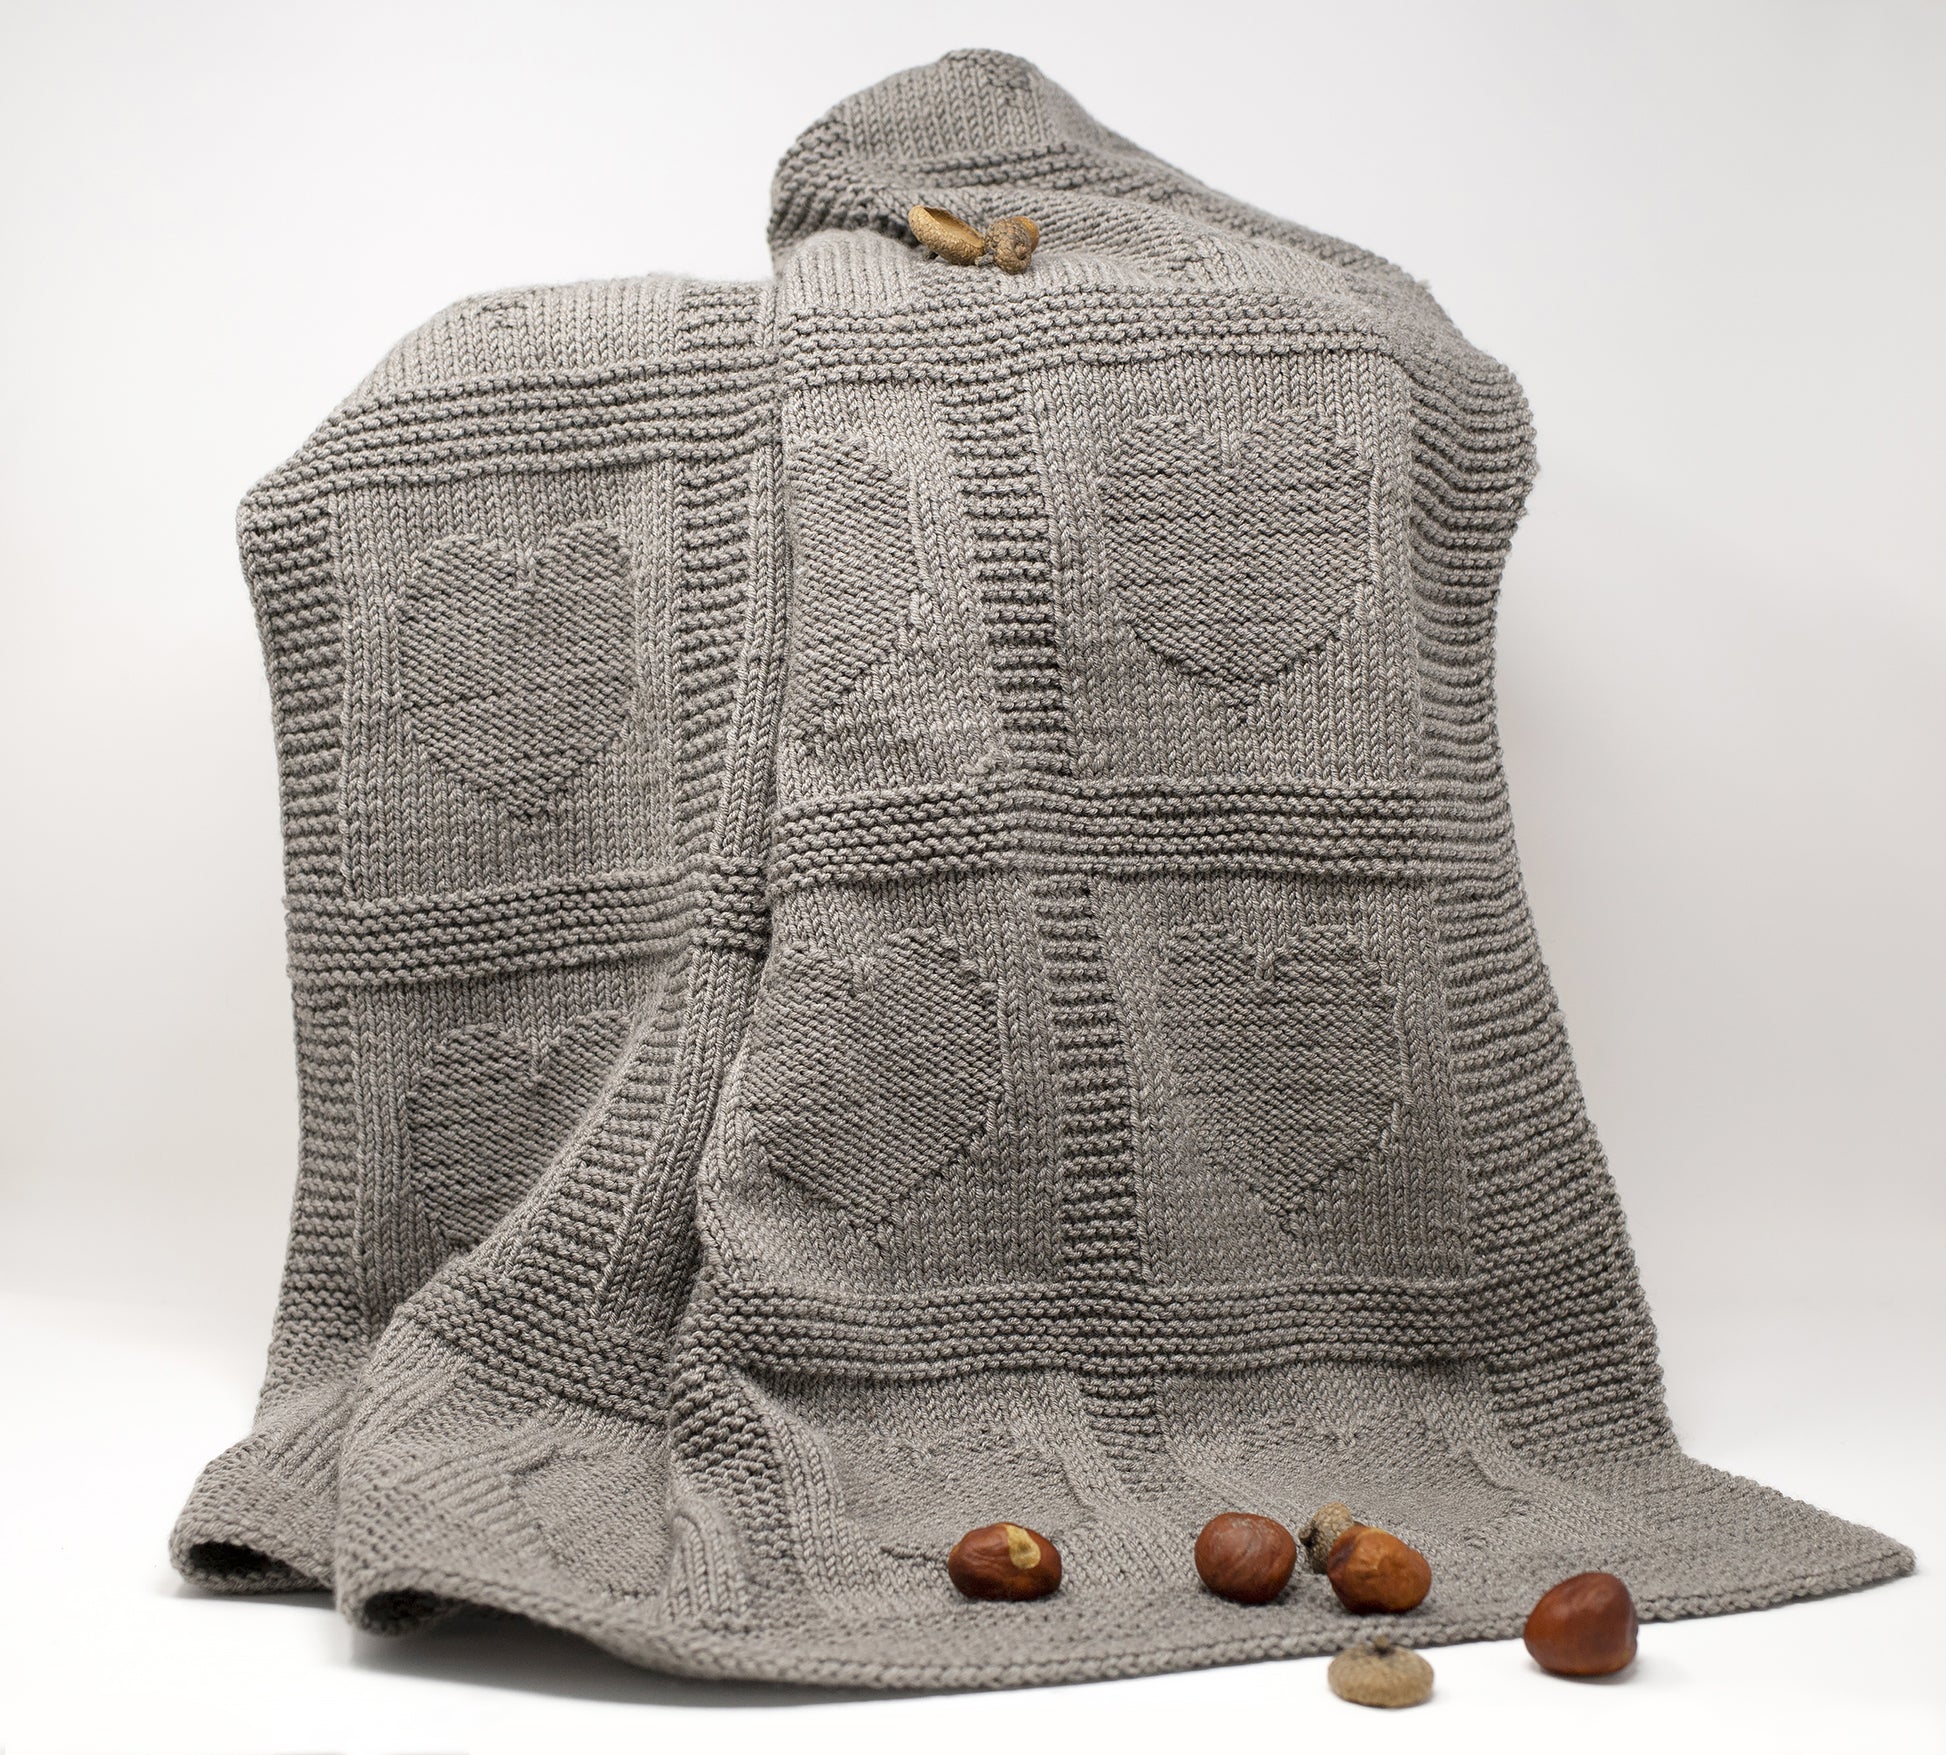 beige brown merino wool hand-knitted baby blanket in Hearts knitting pattern